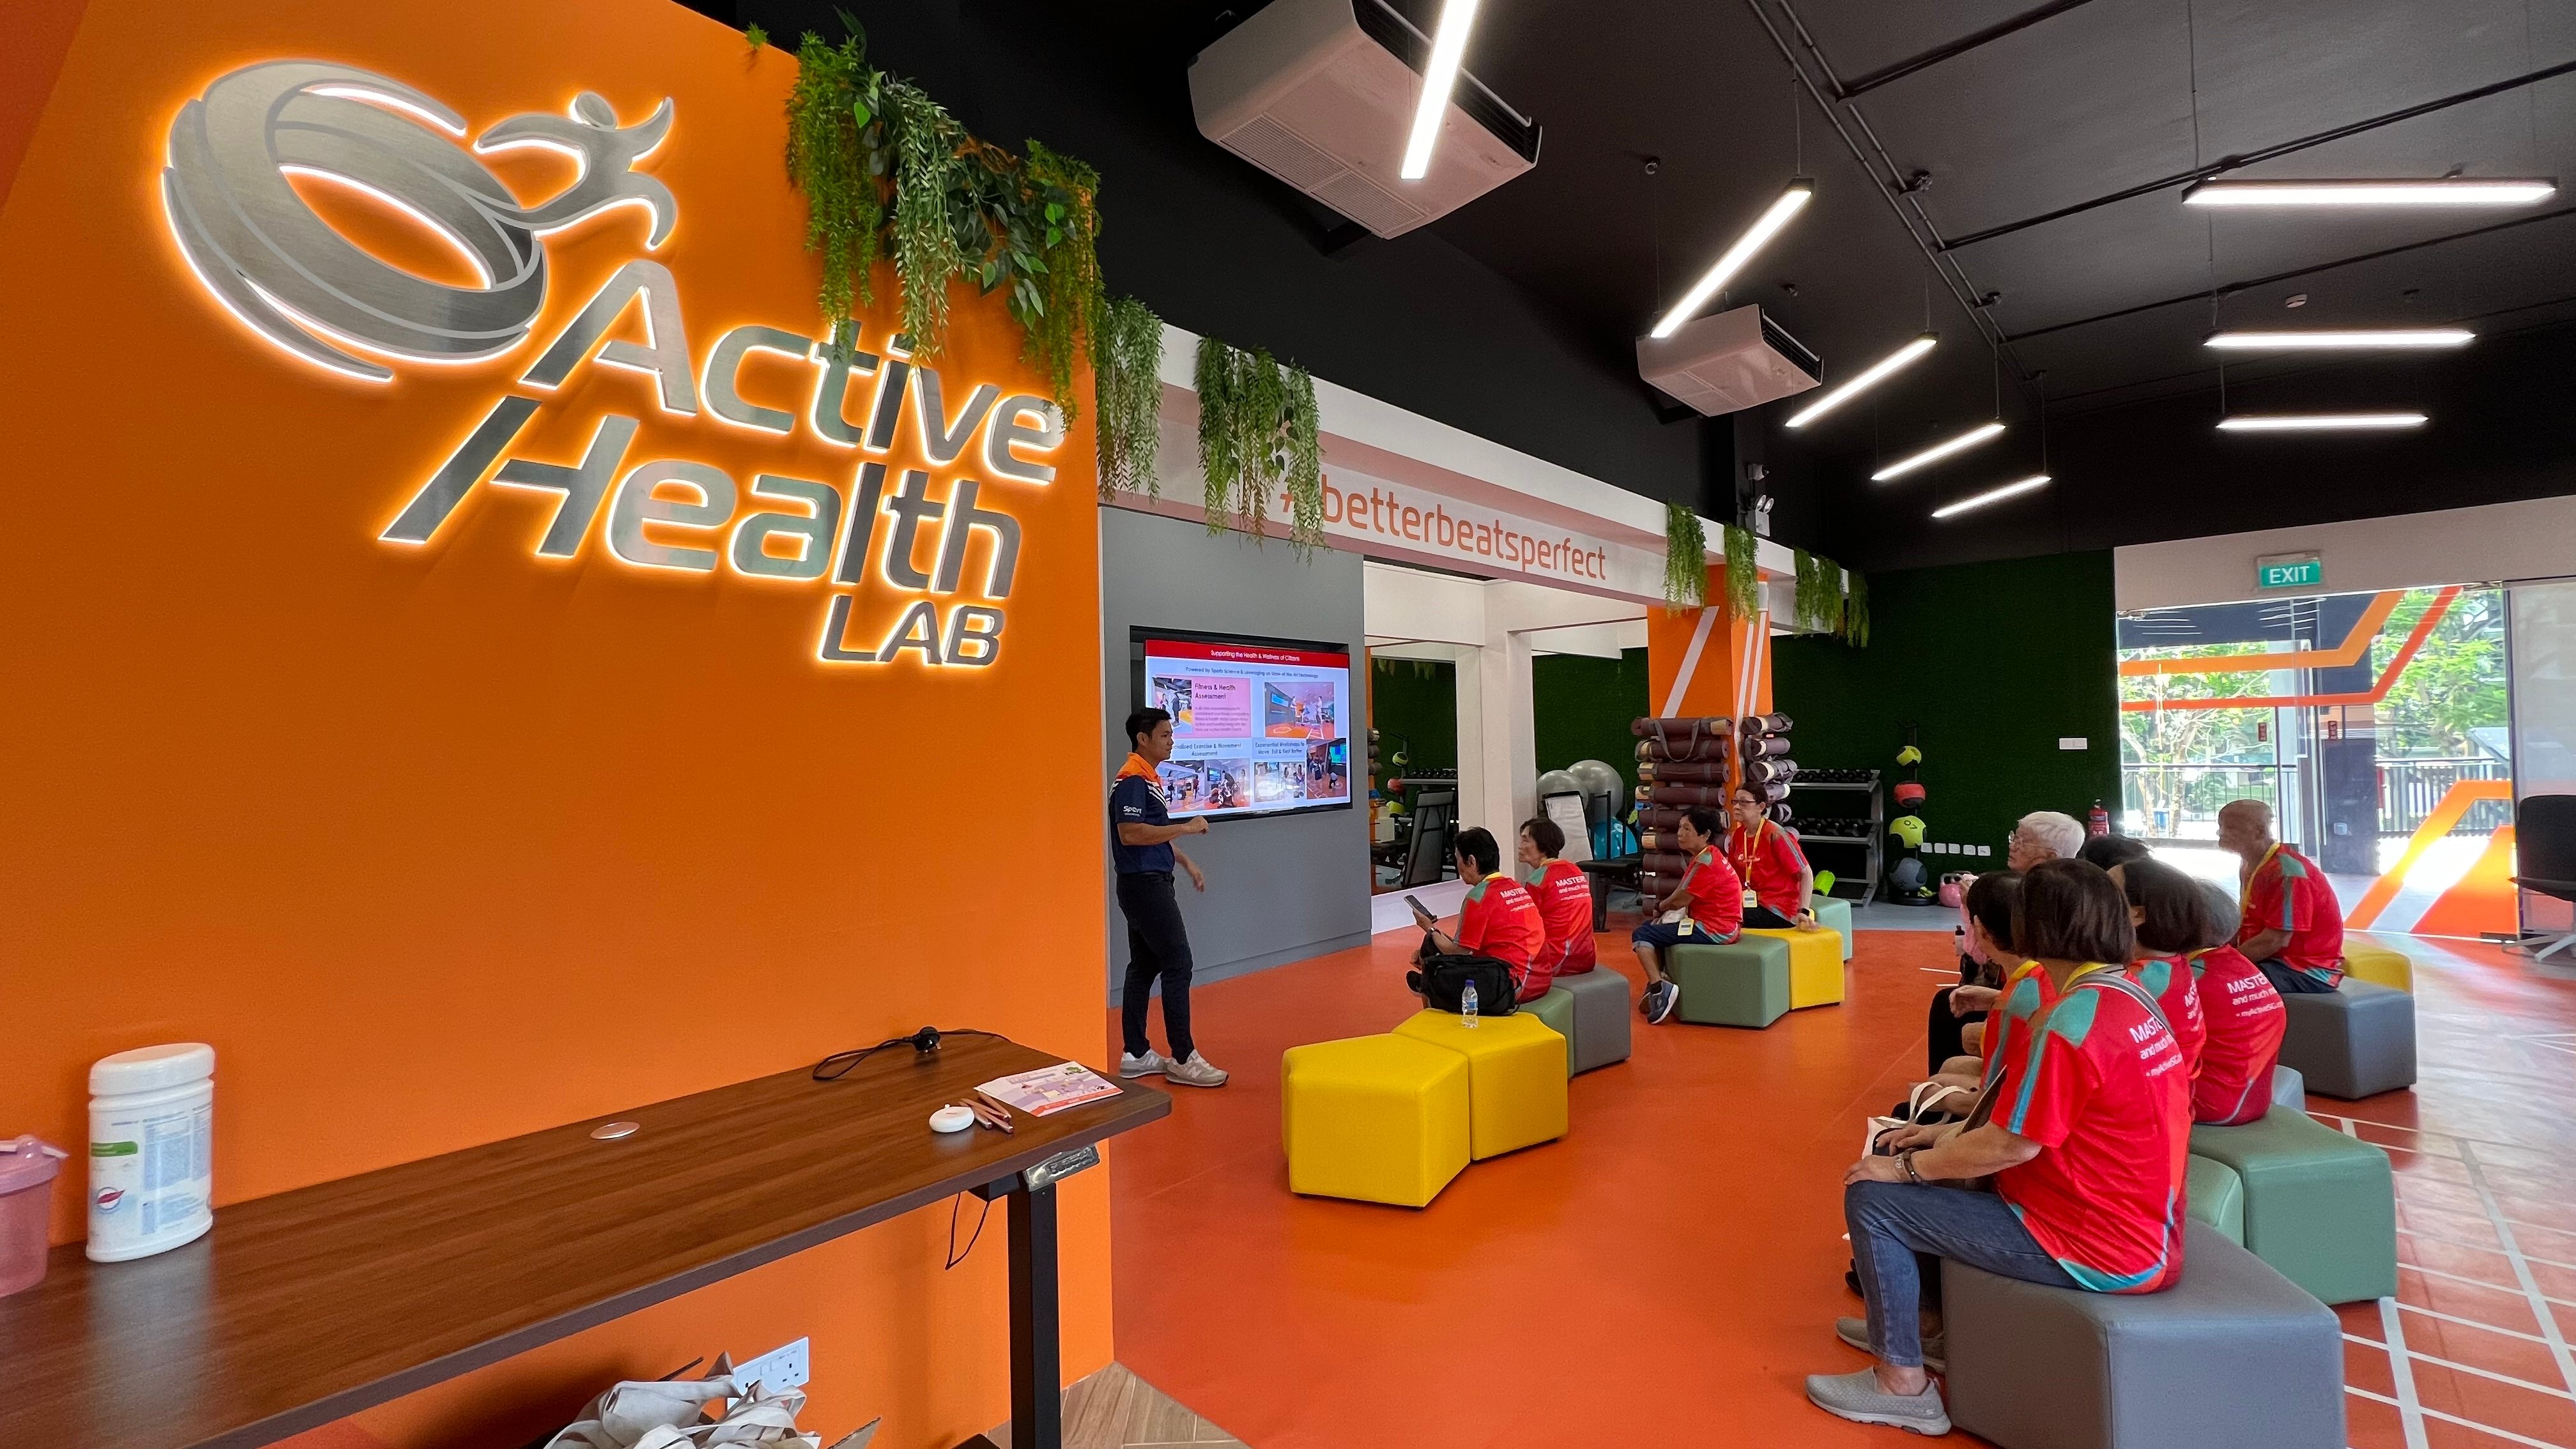 Delta Sport Centre - Active Health Lab